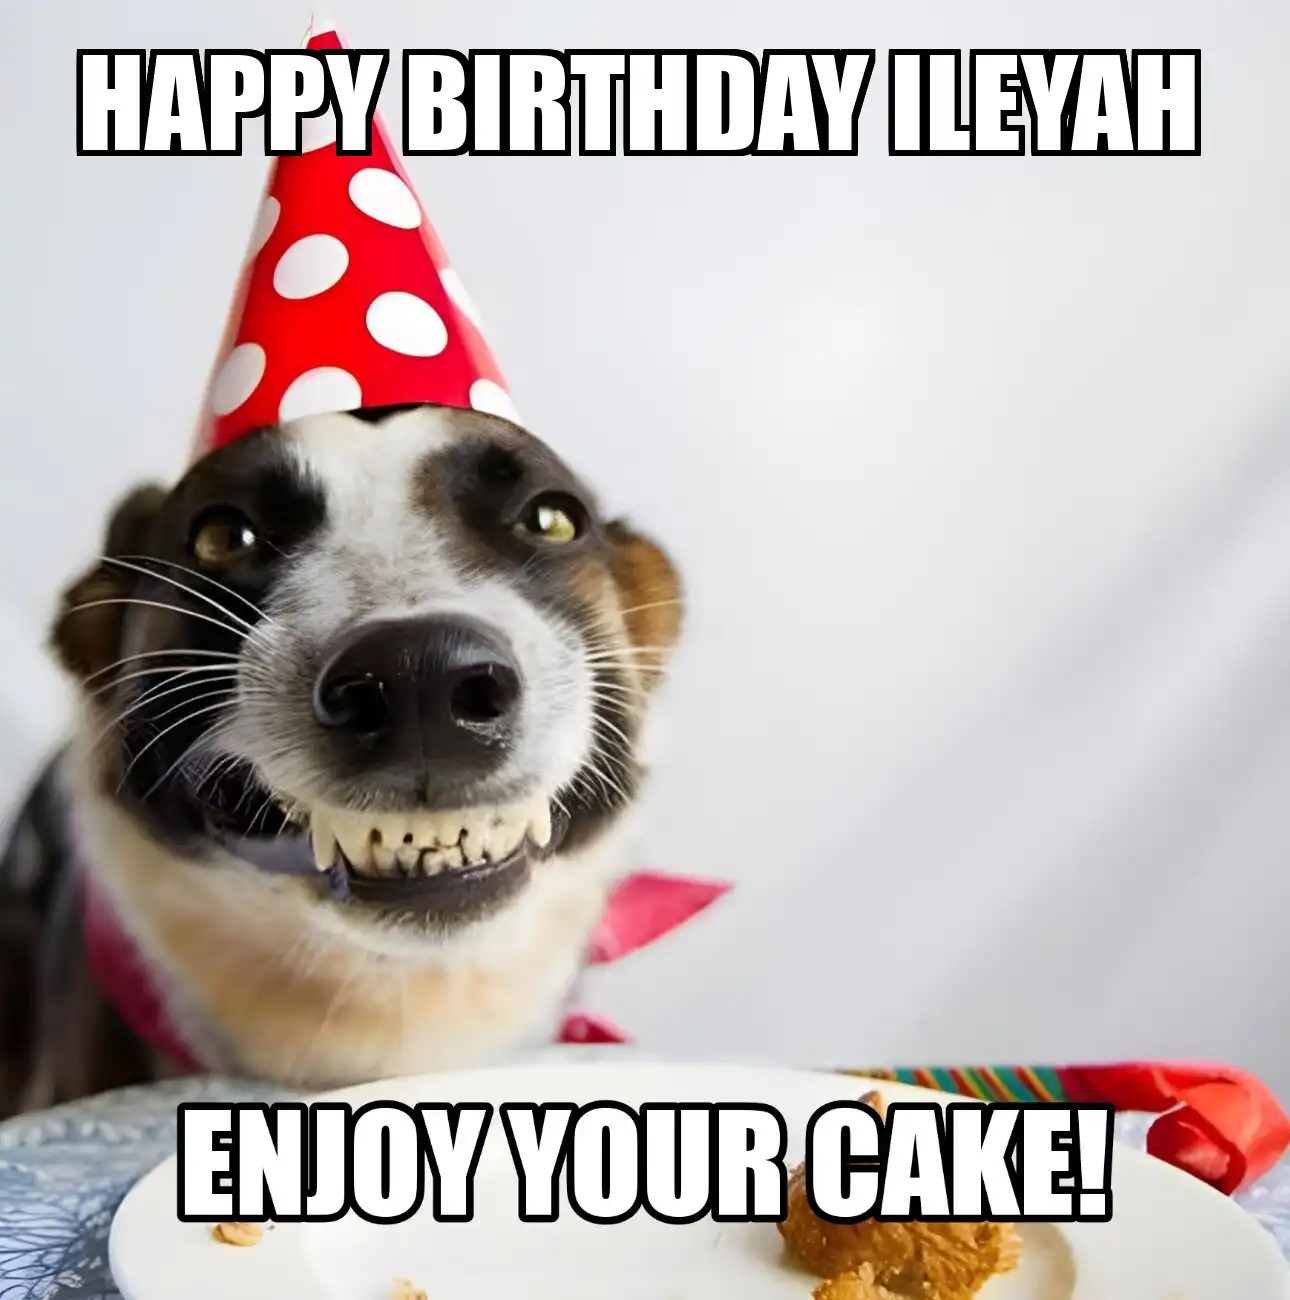 Happy Birthday Ileyah Enjoy Your Cake Dog Meme